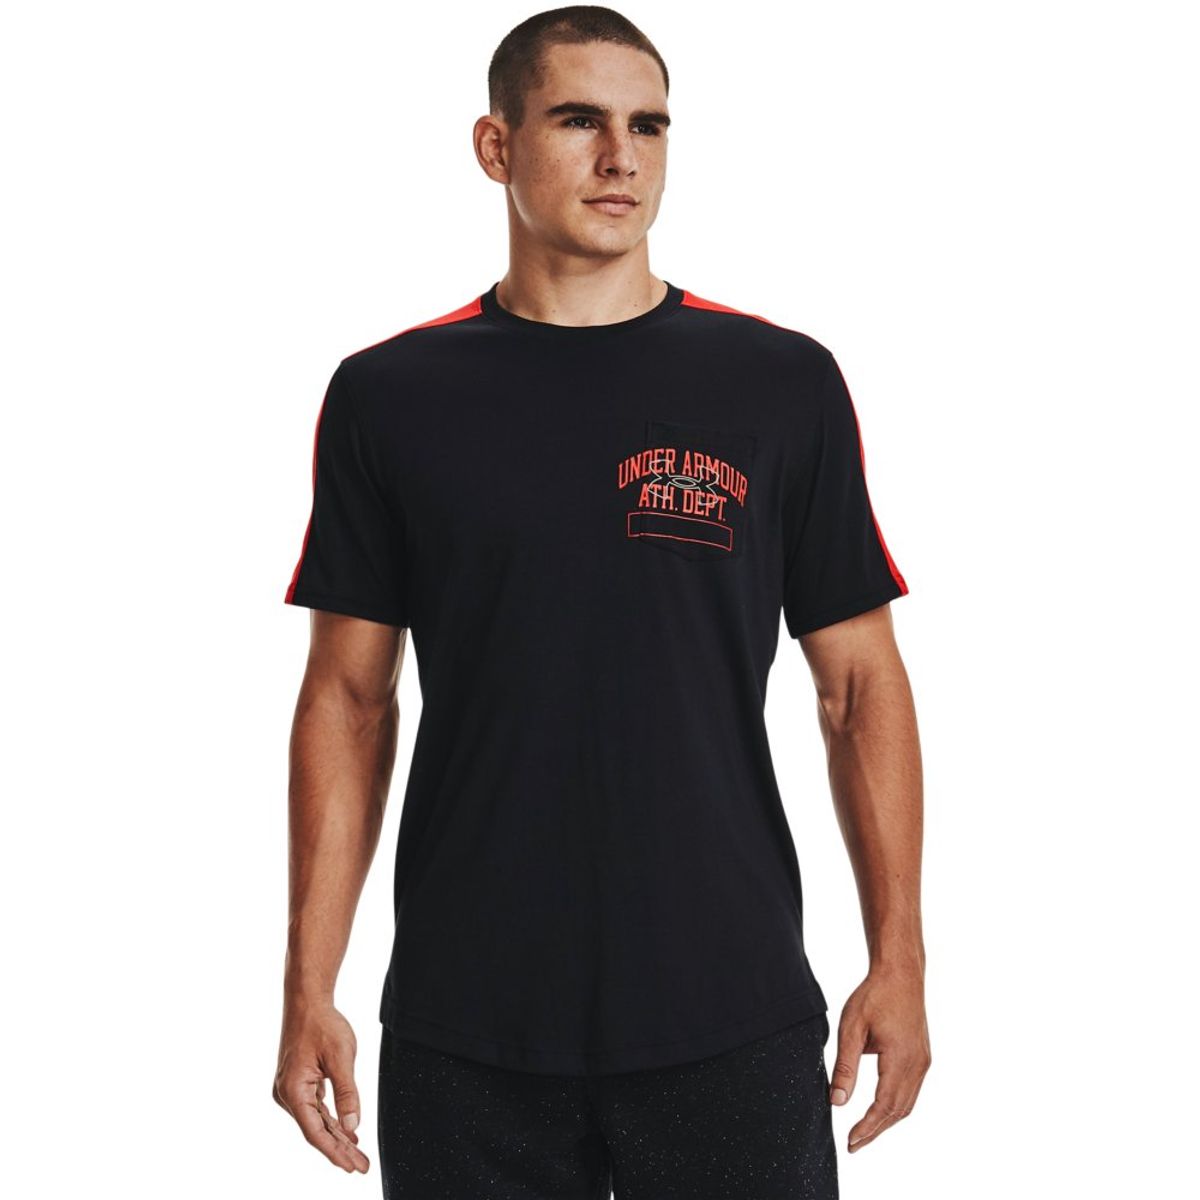 Camiseta de Treino Masculina Under Armour Athletic Dept Pocket Tee - Faz a  Boa!